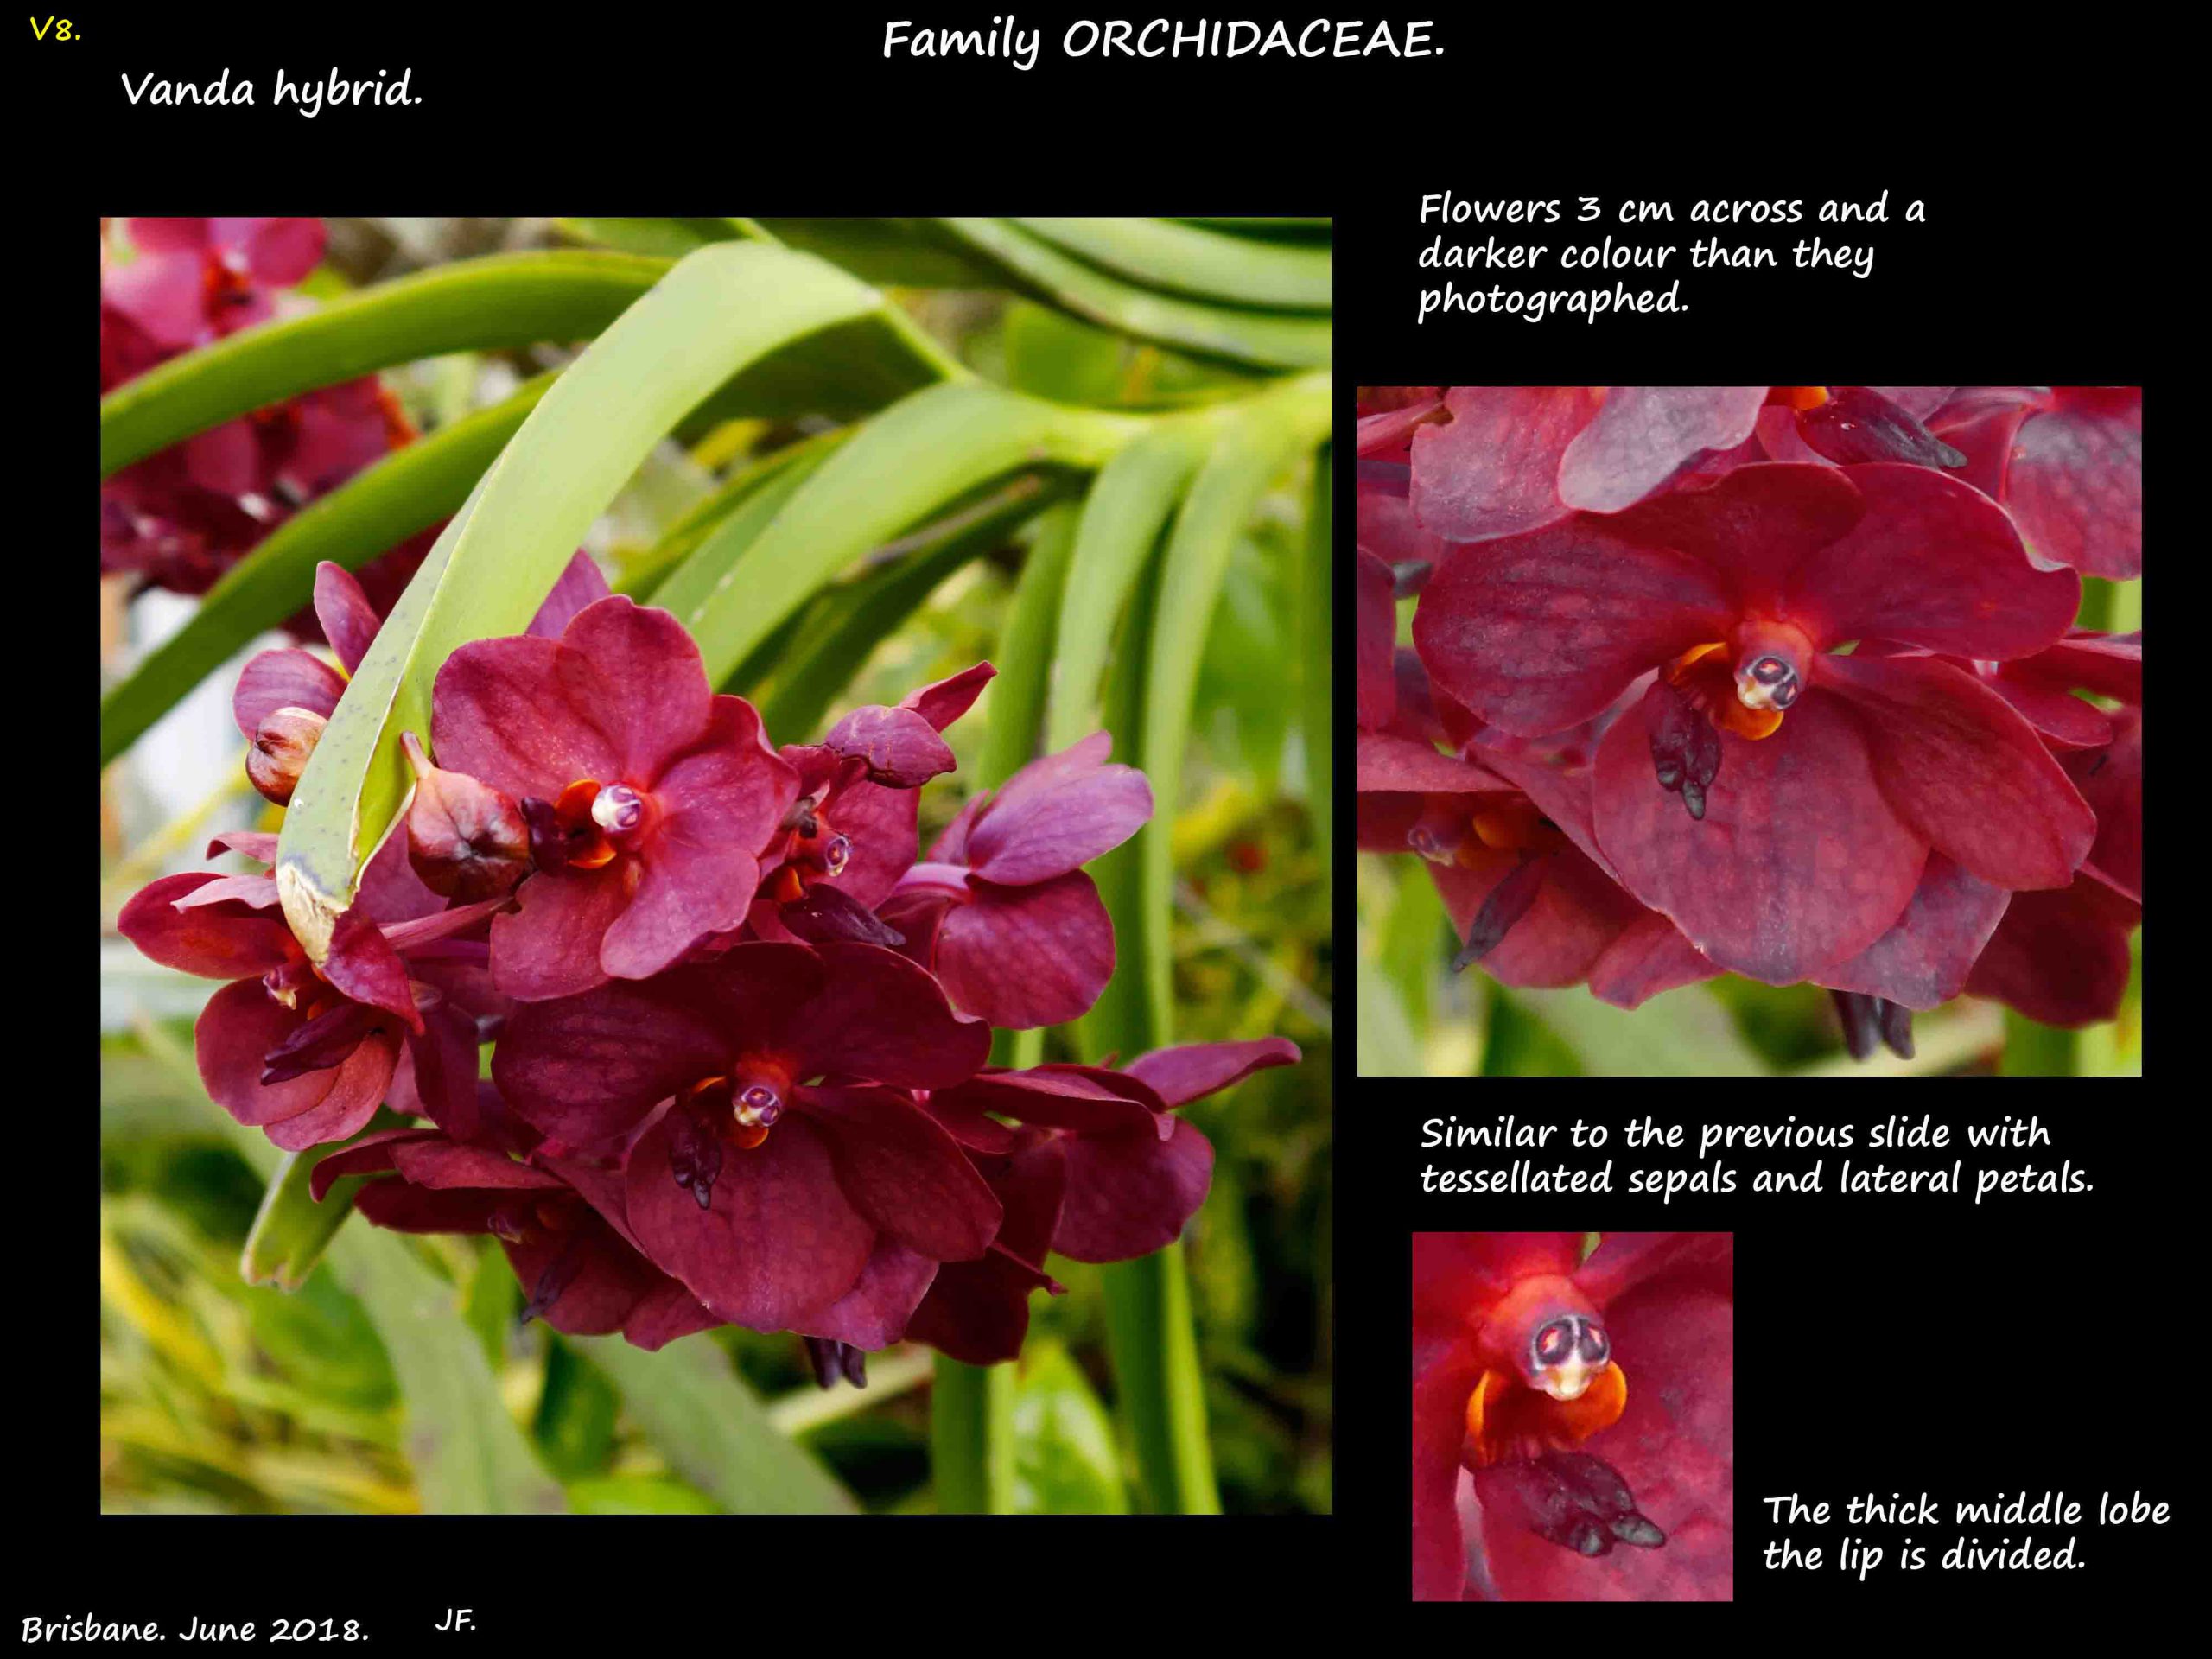 2 A deep maroon Vanda orchid